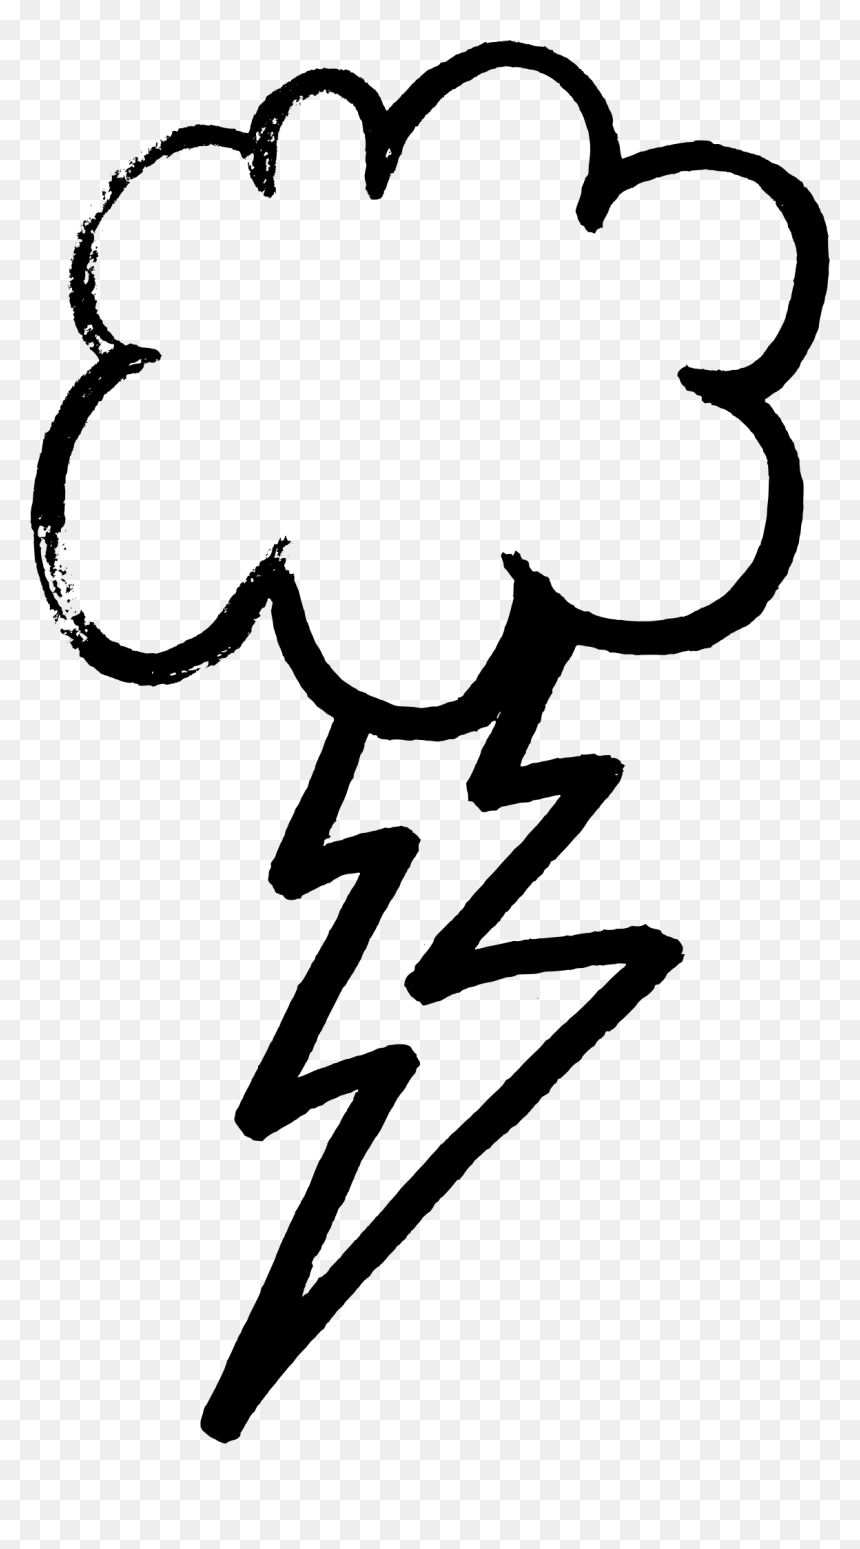 Lightning Cloud Thunderstorm Clip Art, PNG, 524x484px, Lightning - Clip ...